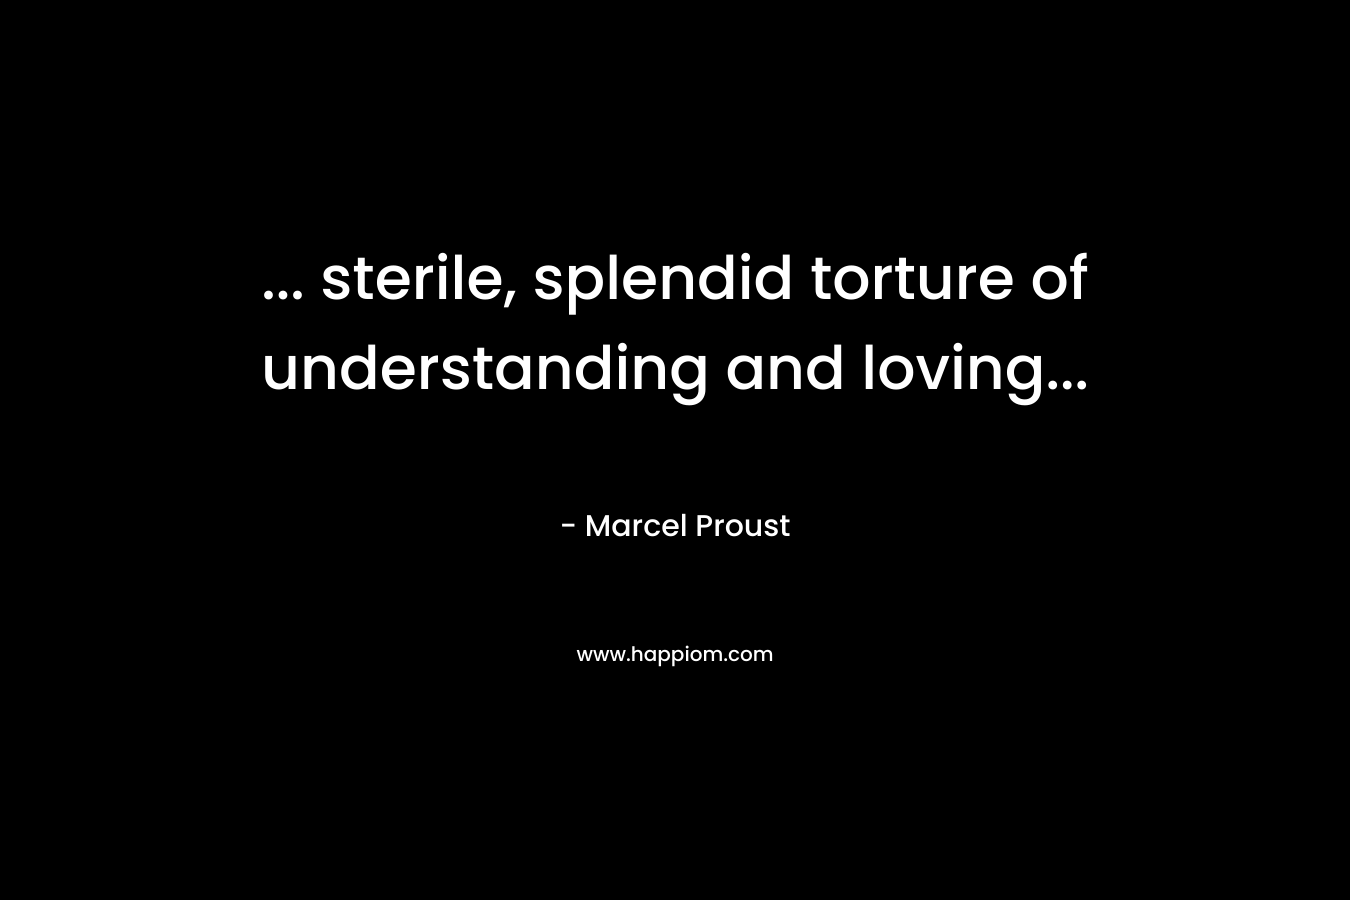 ... sterile, splendid torture of understanding and loving...